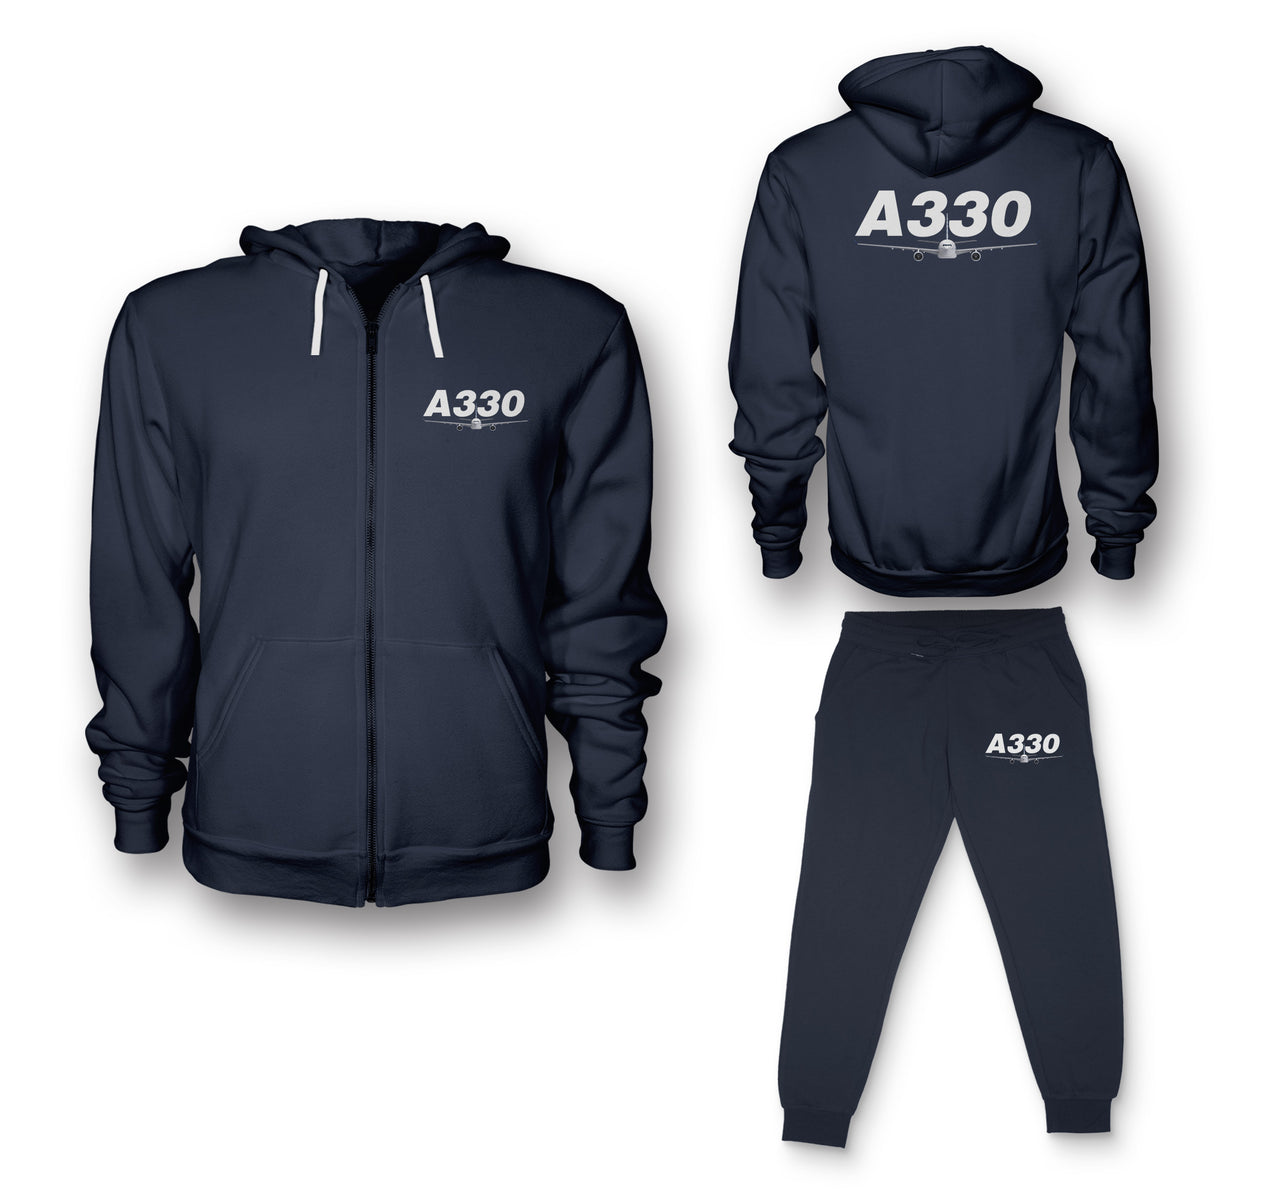 Super Airbus A330 Designed Zipped Hoodies & Sweatpants Set